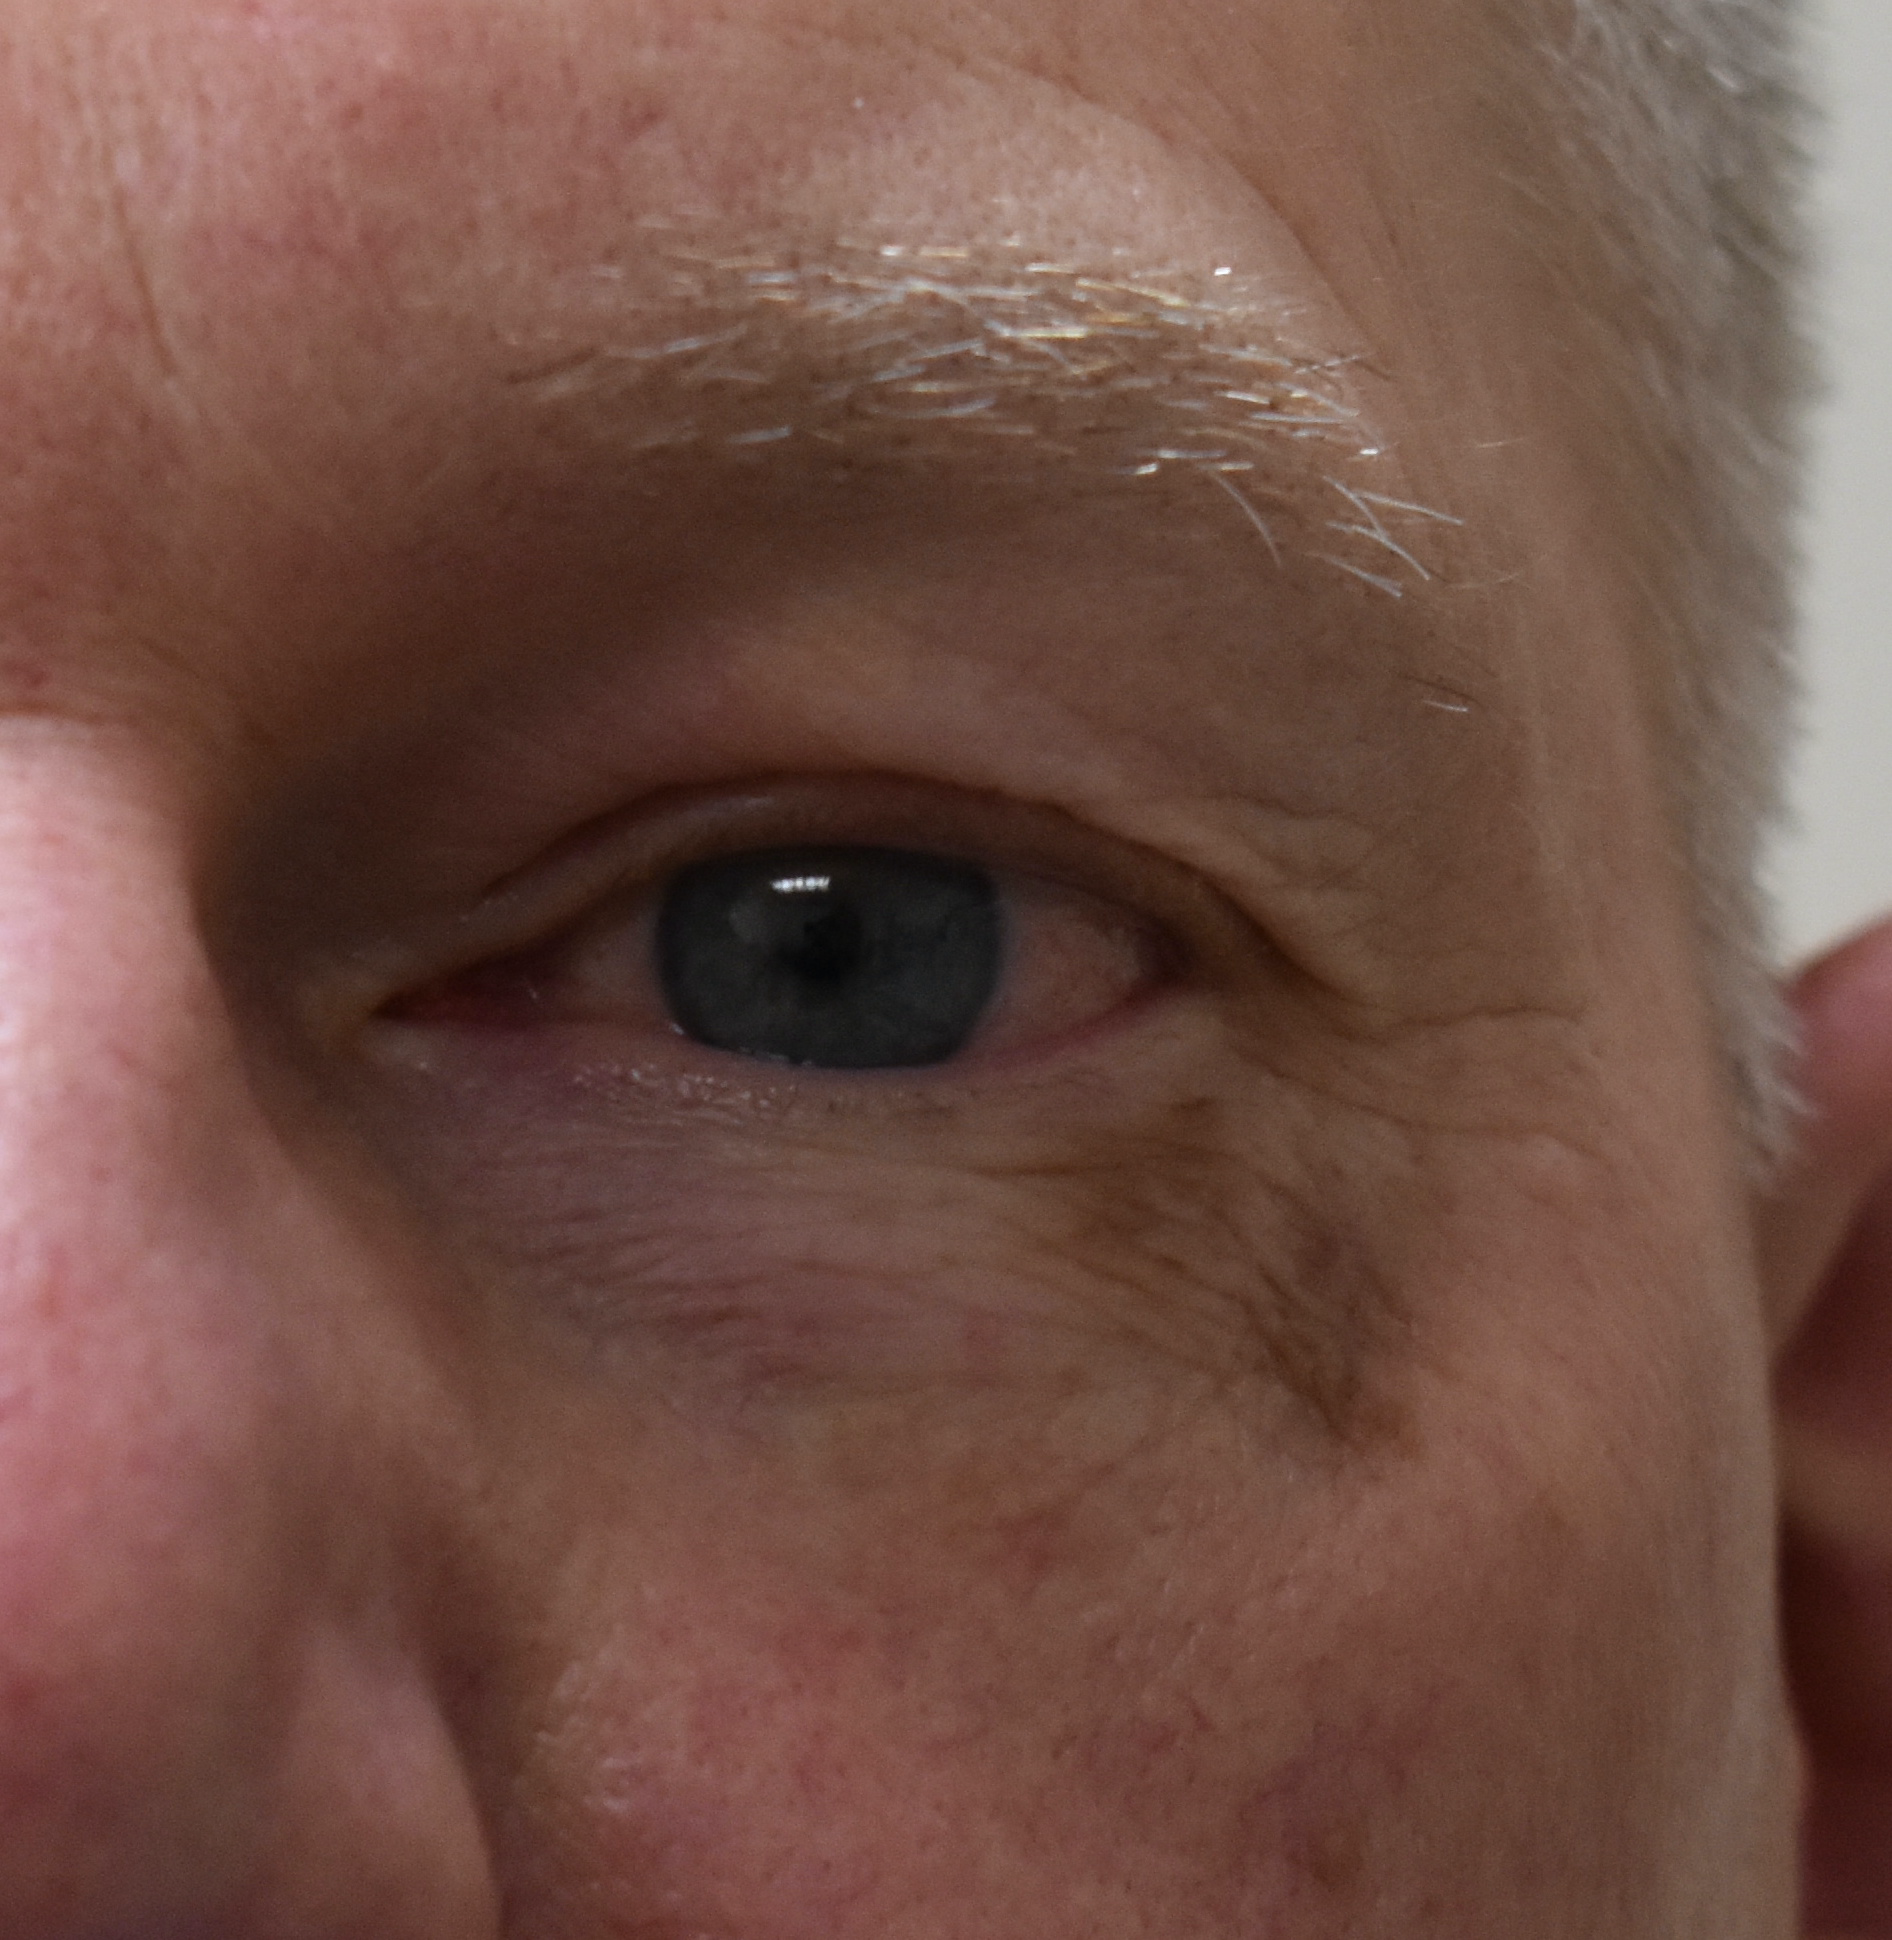 Melanoma in situ involving the left lower eyelid